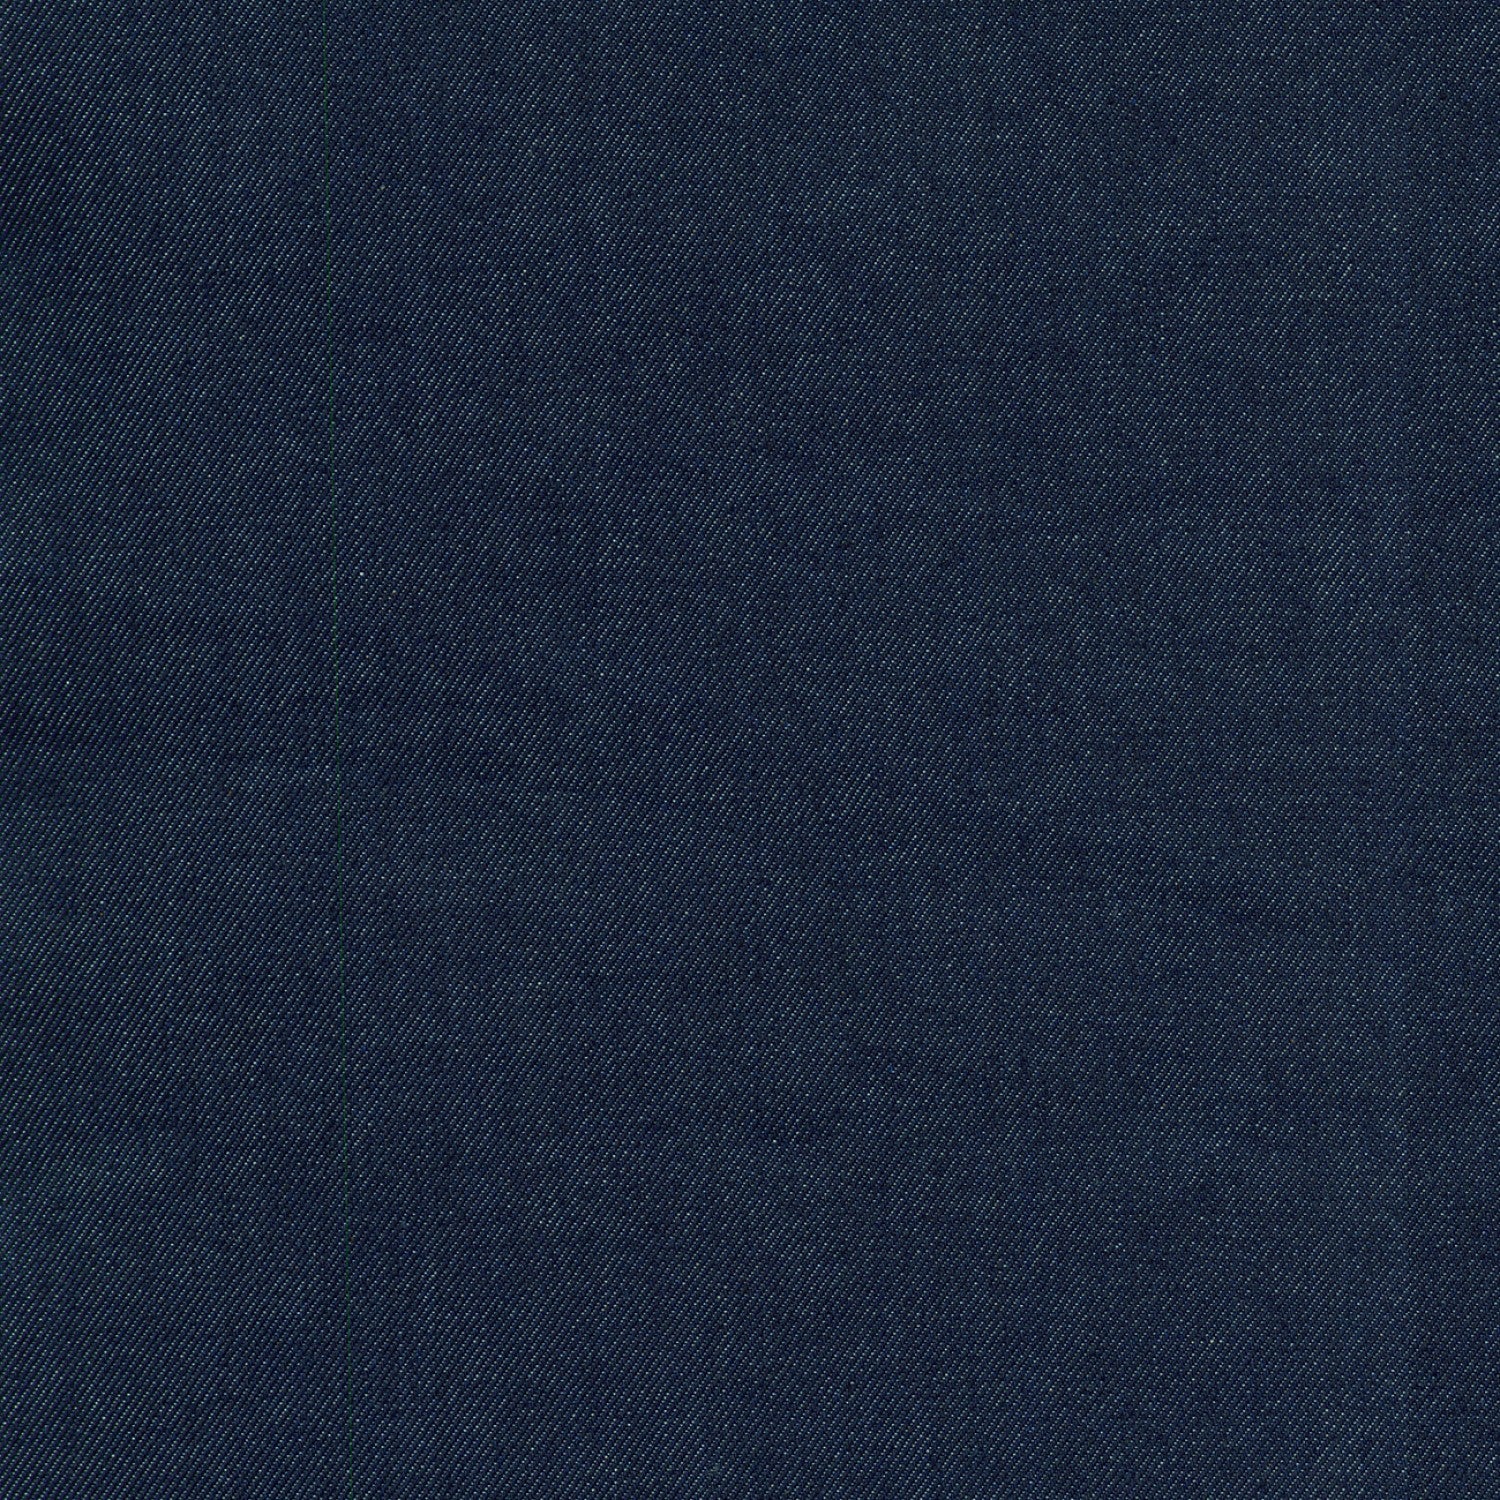 Fabric, Indigo Durham Stretch Denim Indigo, D207-1178